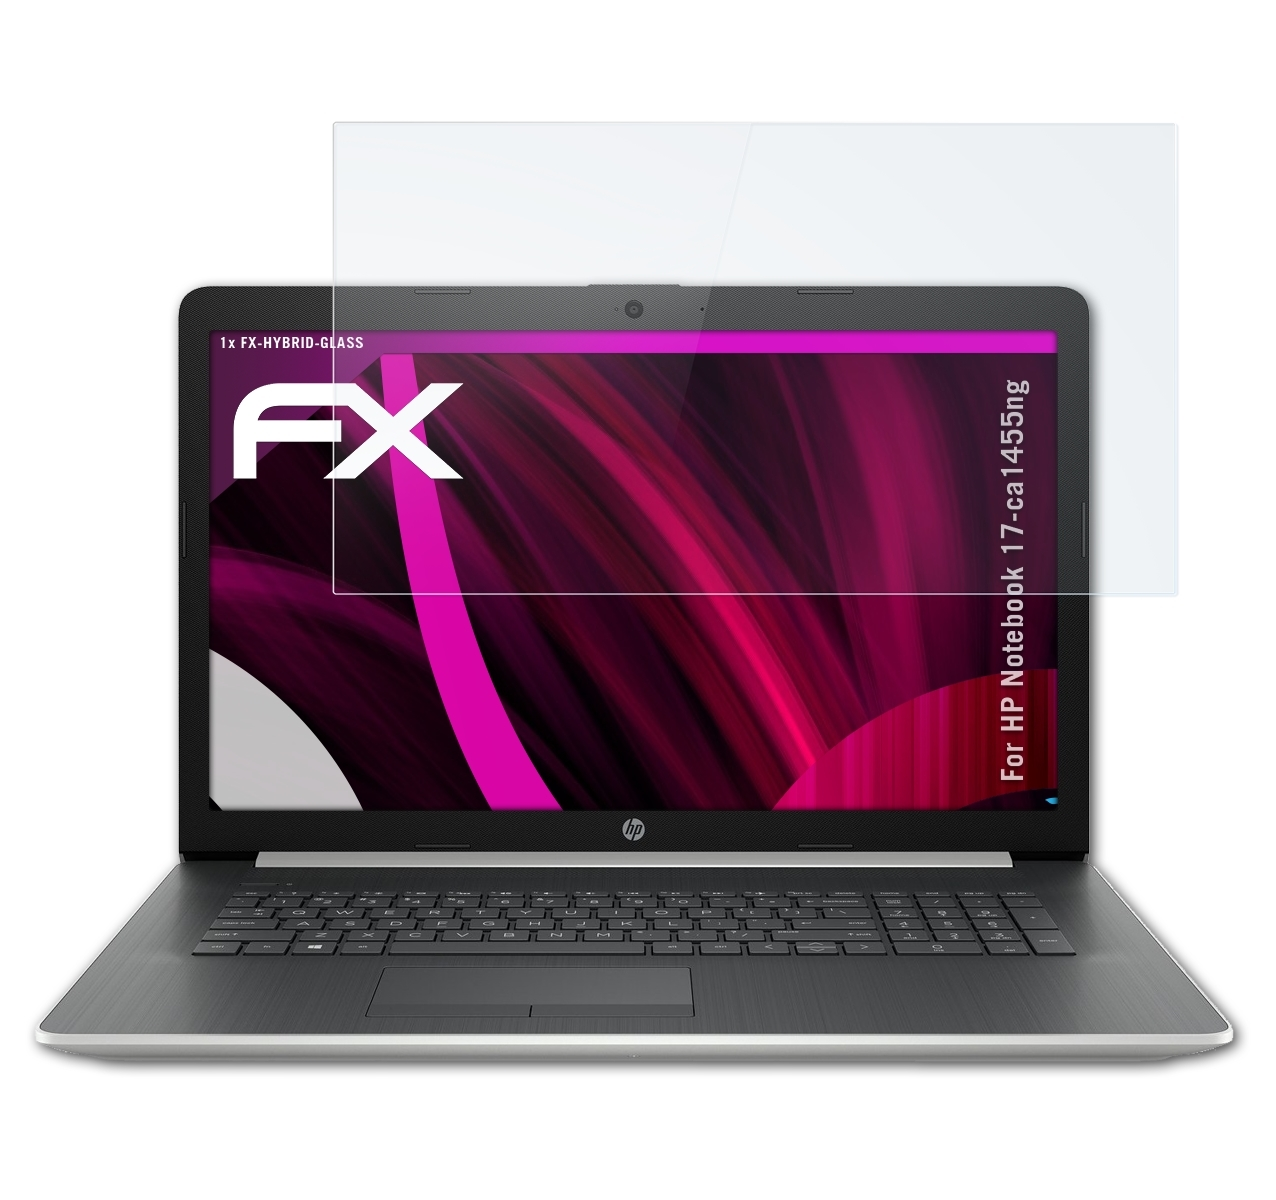 17-ca1455ng) ATFOLIX Notebook FX-Hybrid-Glass Schutzglas(für HP